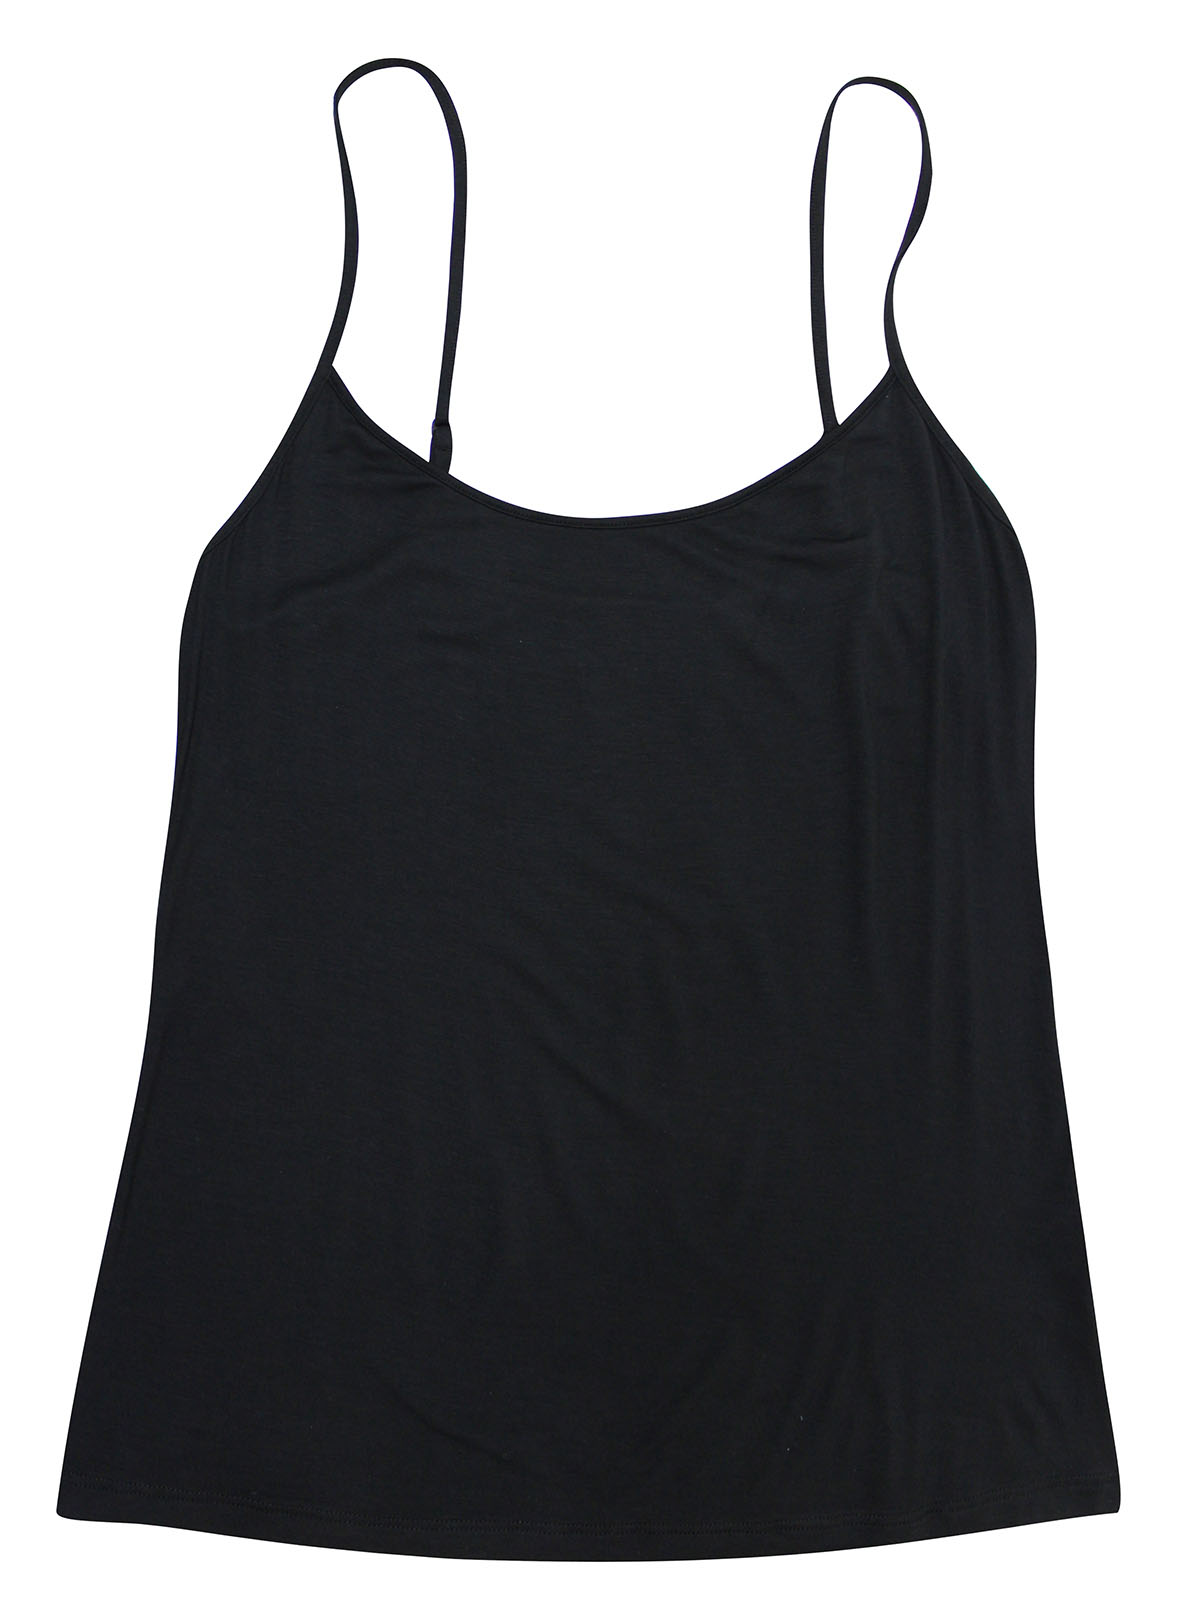 George - - G3ORGE BLACK Cami Vest Top - Plus Size 12/14 to 24/26